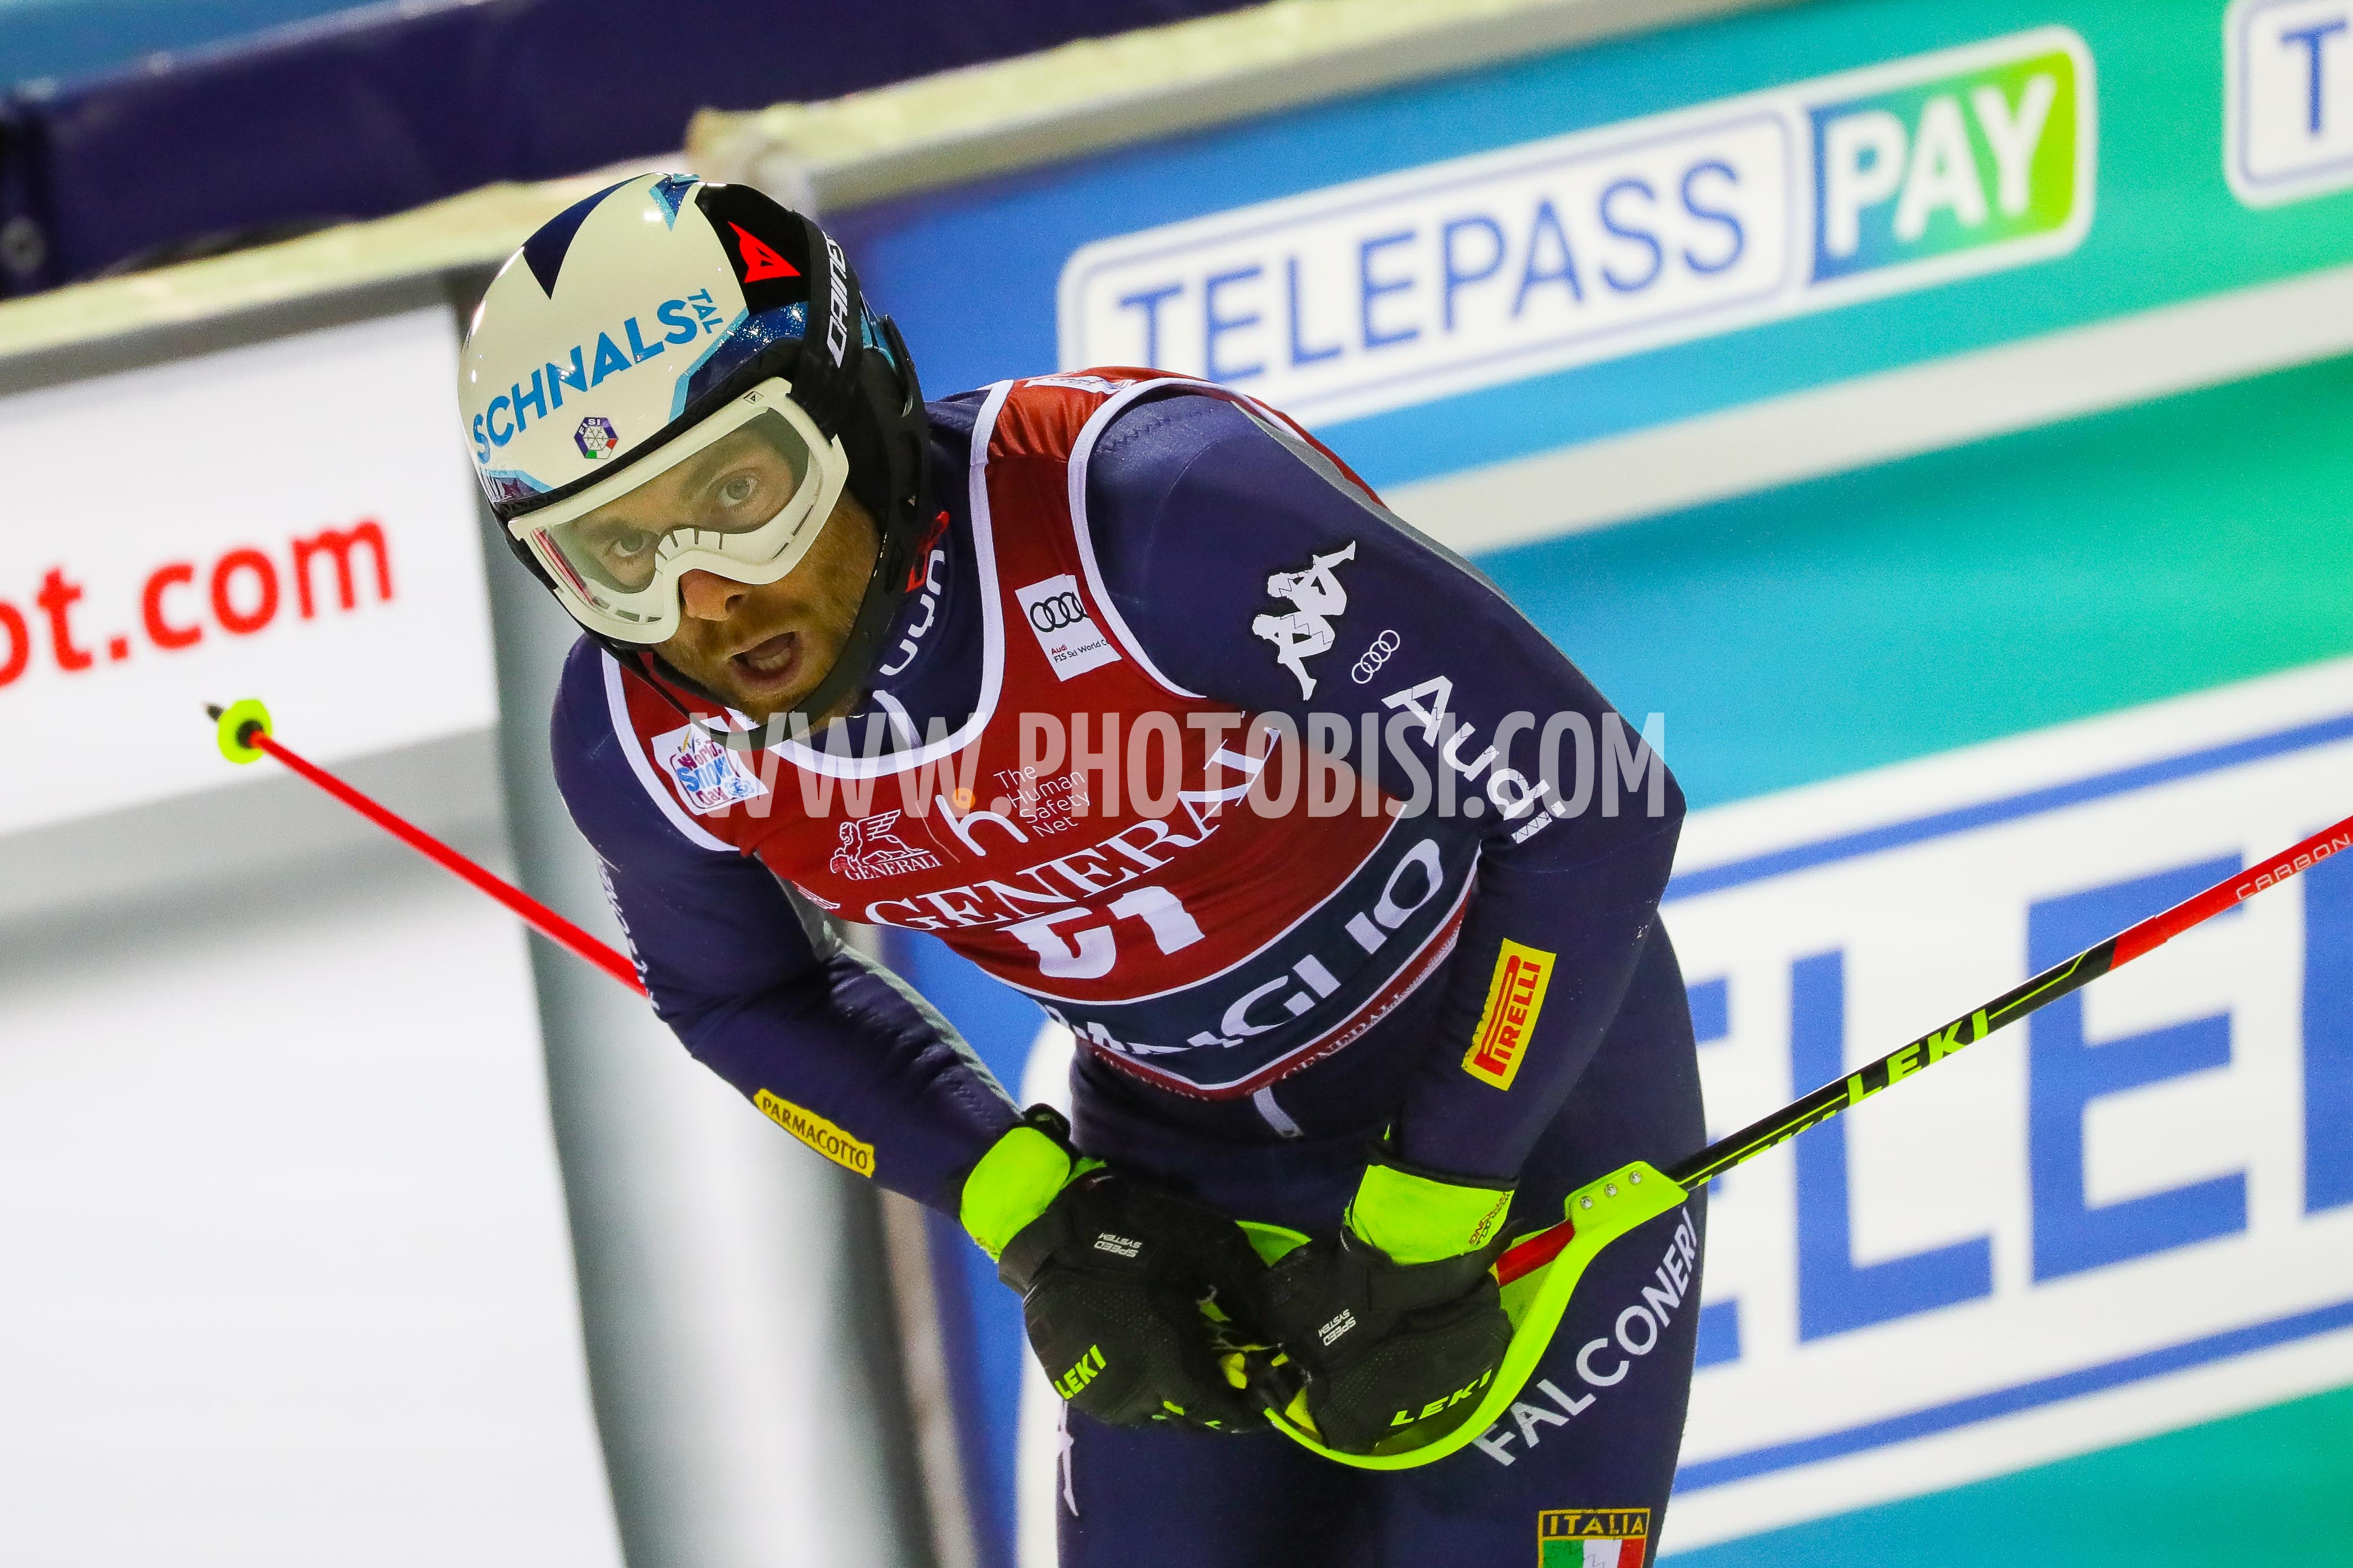 SKIING - FIS SKI WORLD CUP, SL Men.Madonna di Campiglio, Veneto, Italy2020-01-08 - WednesdayCredits: PhotoBisi